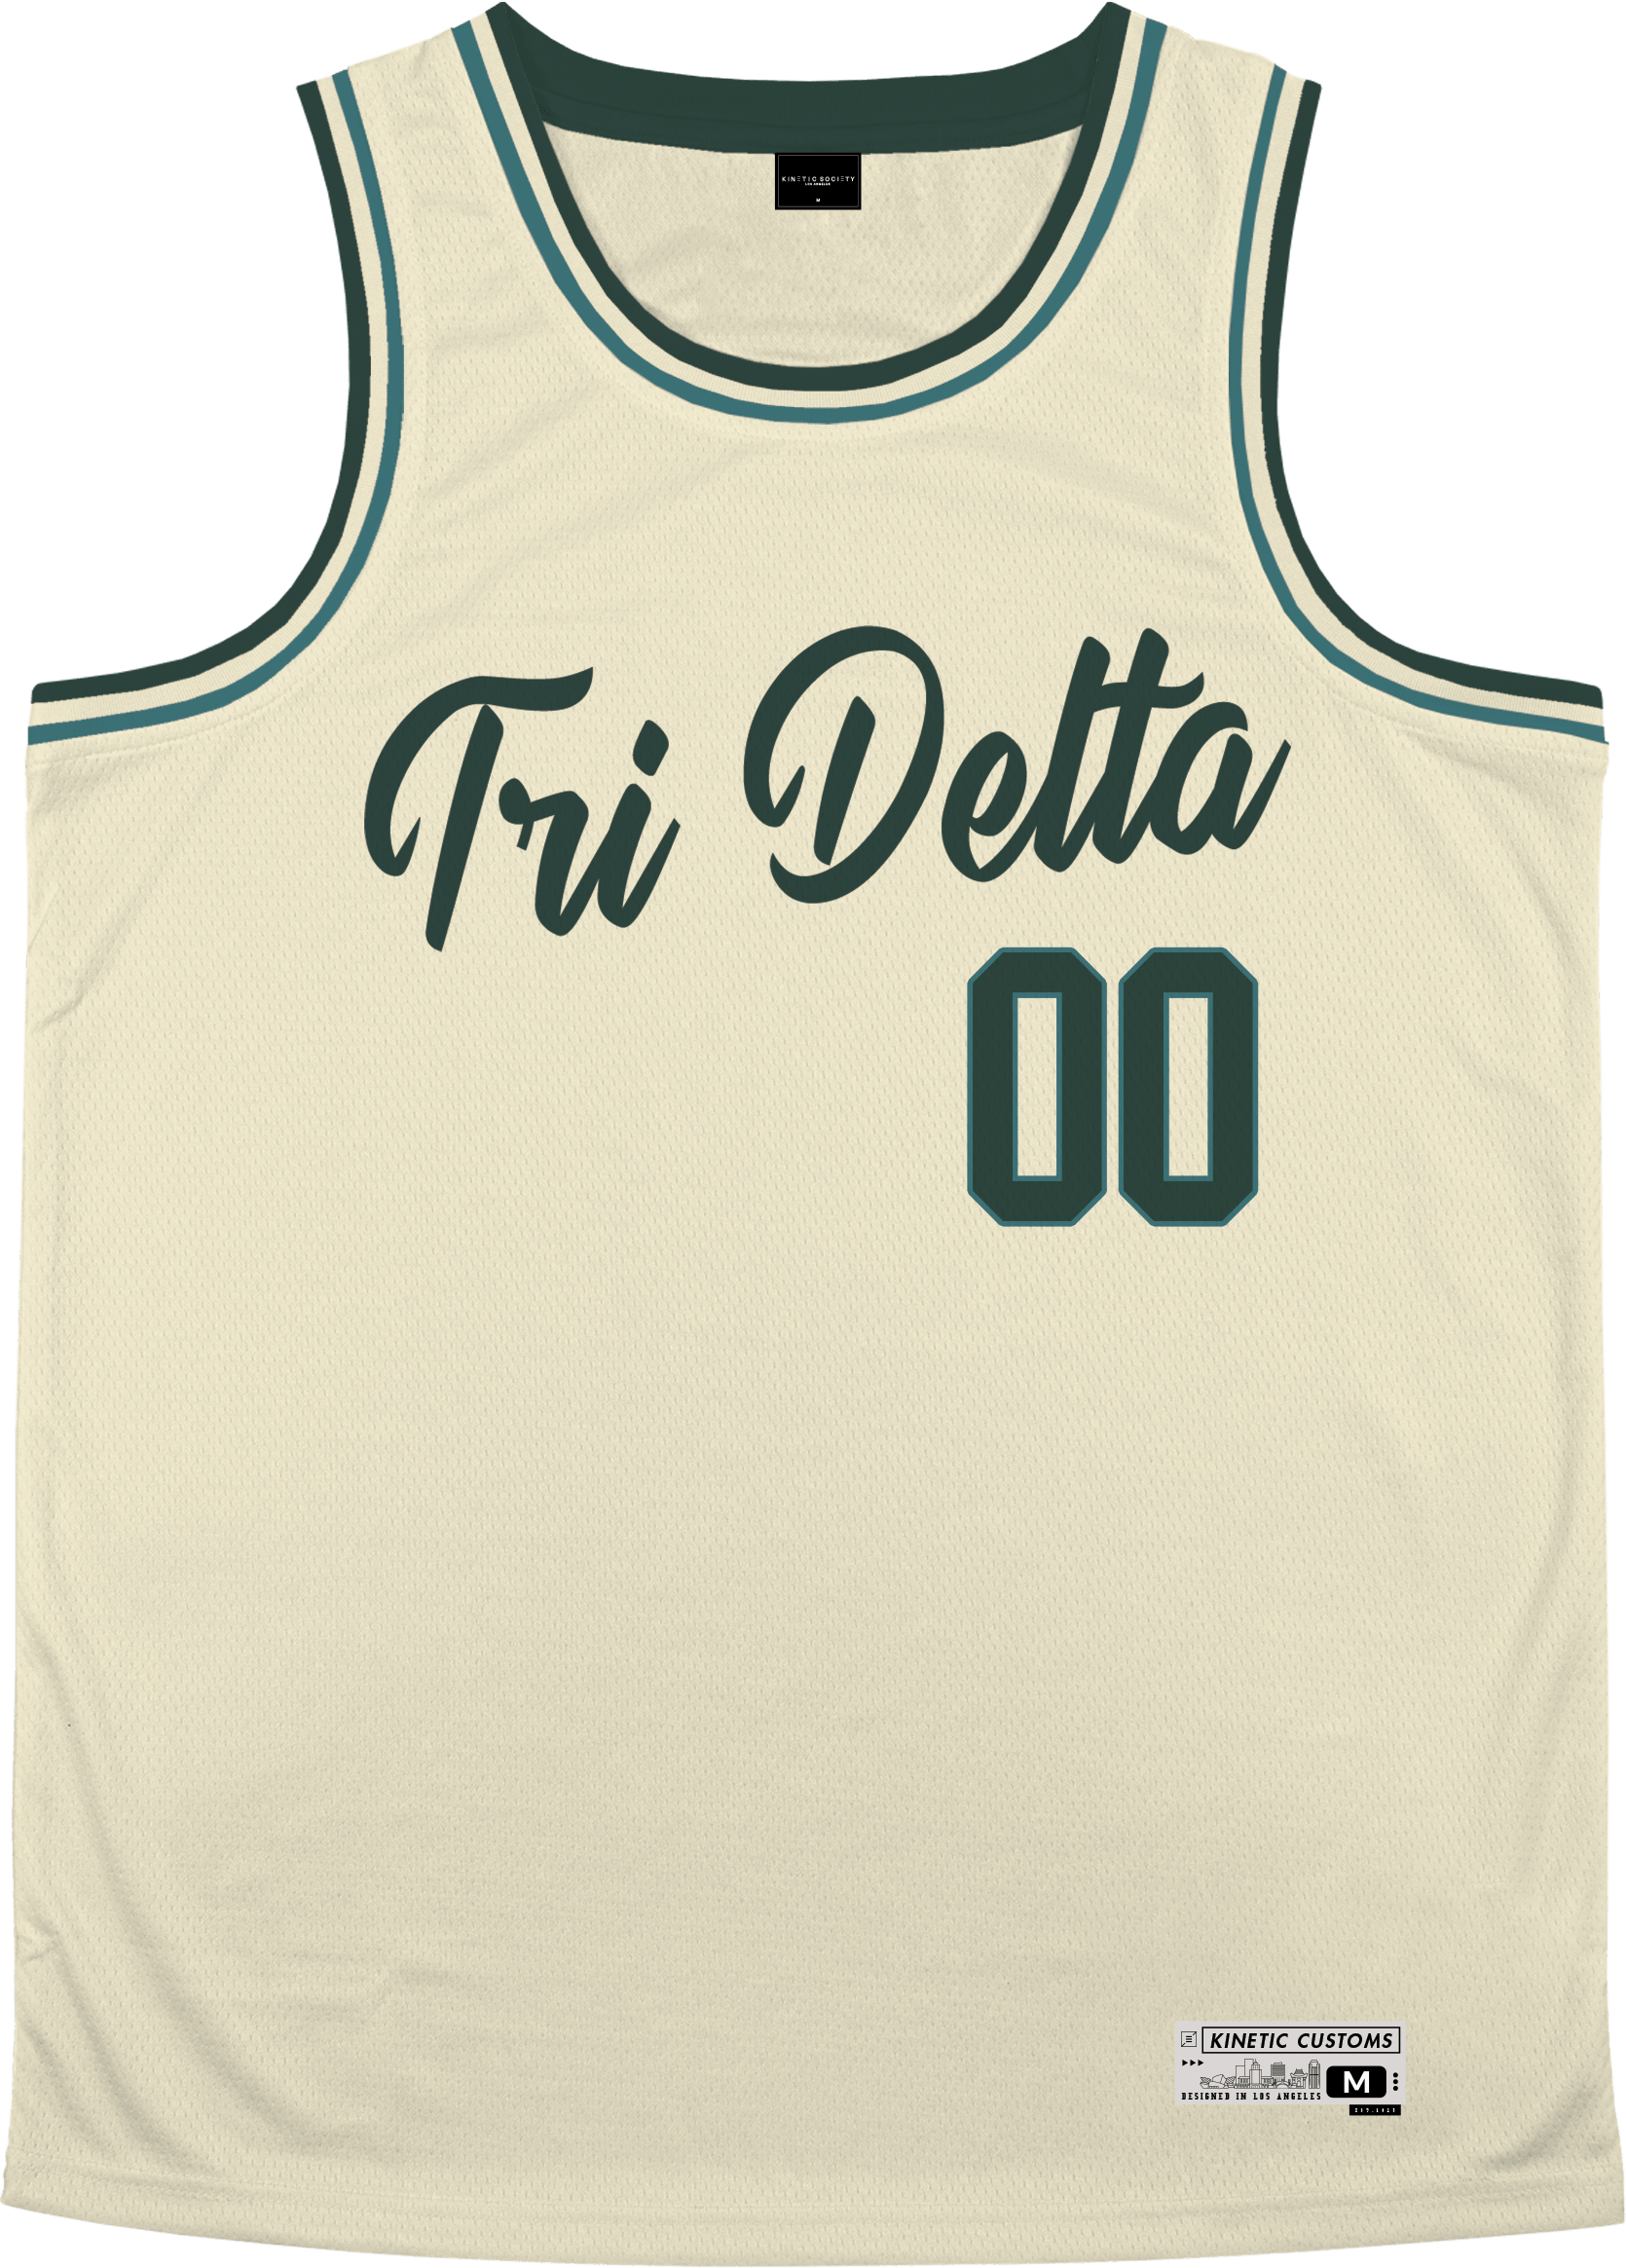 Delta Delta Delta - Buttercream Basketball Jersey - Kinetic Society